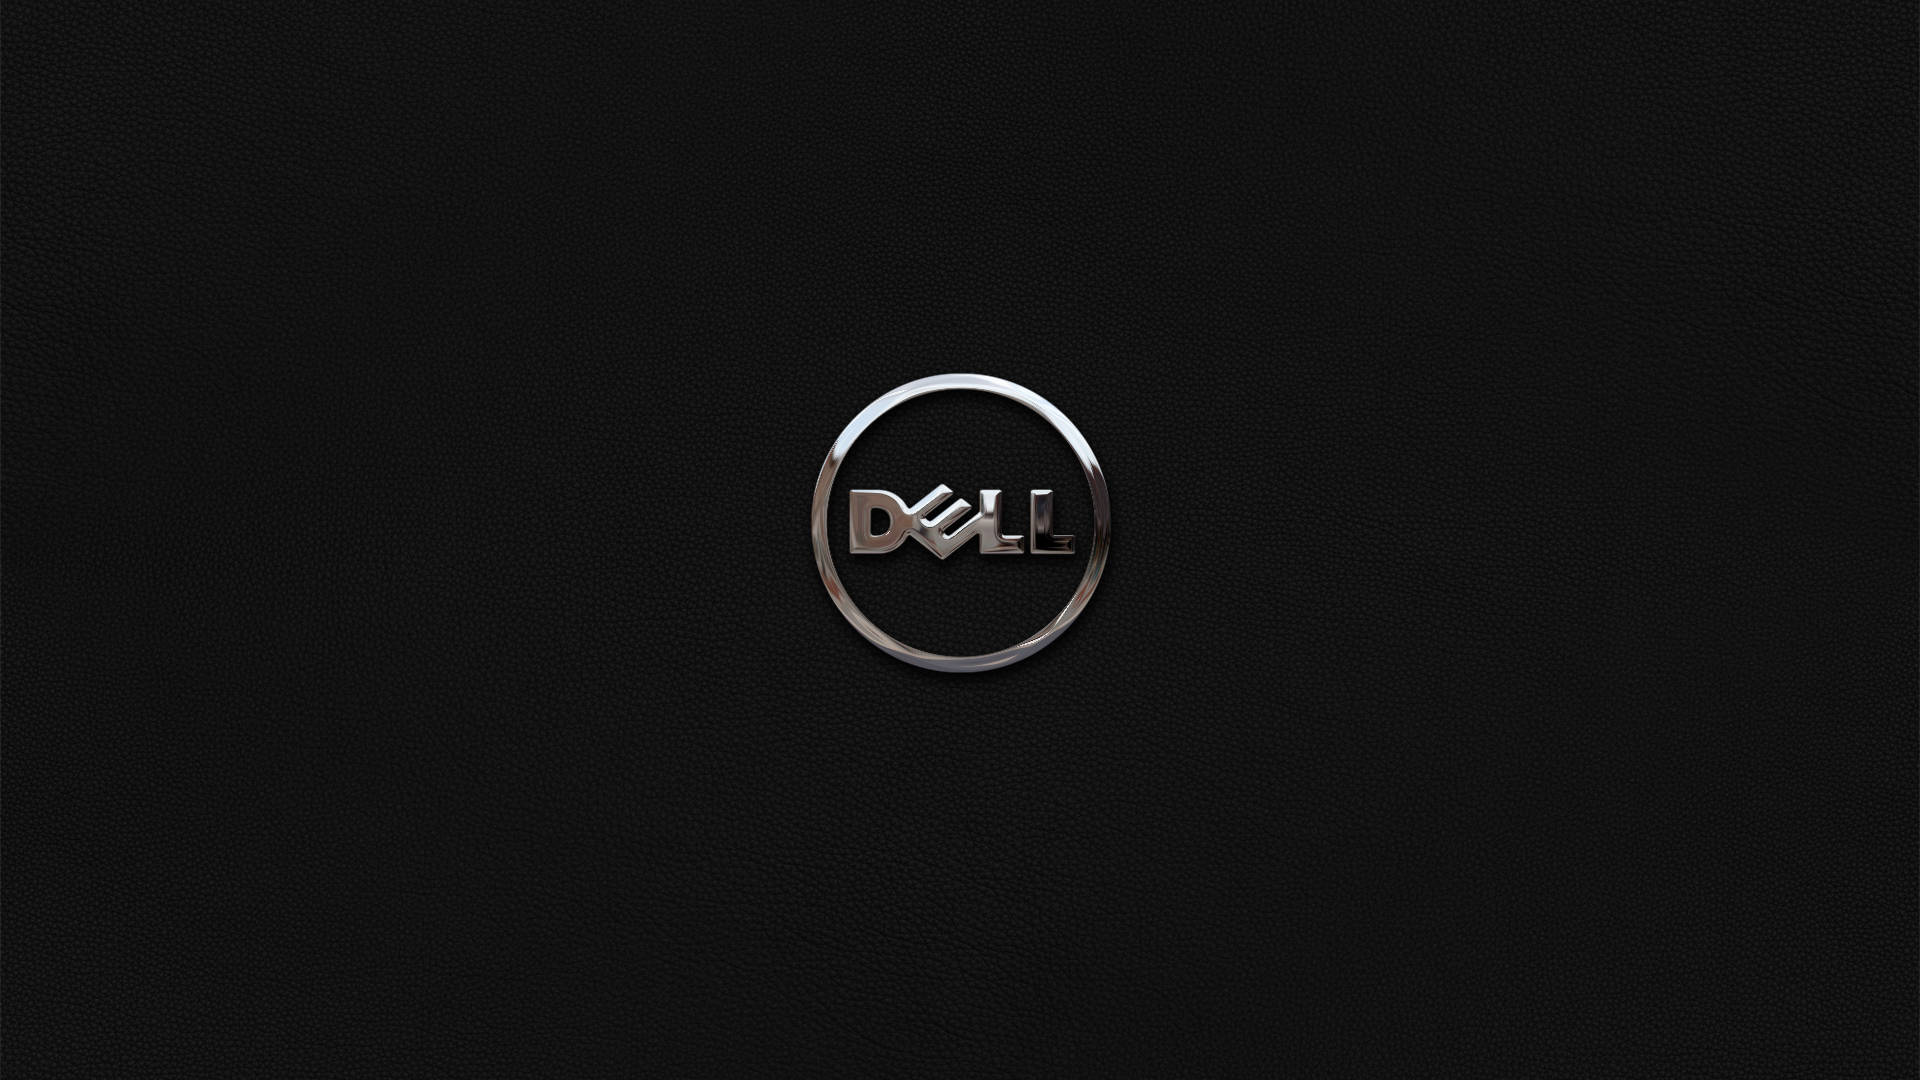 Metallic Dell Hd Logo Wallpaper